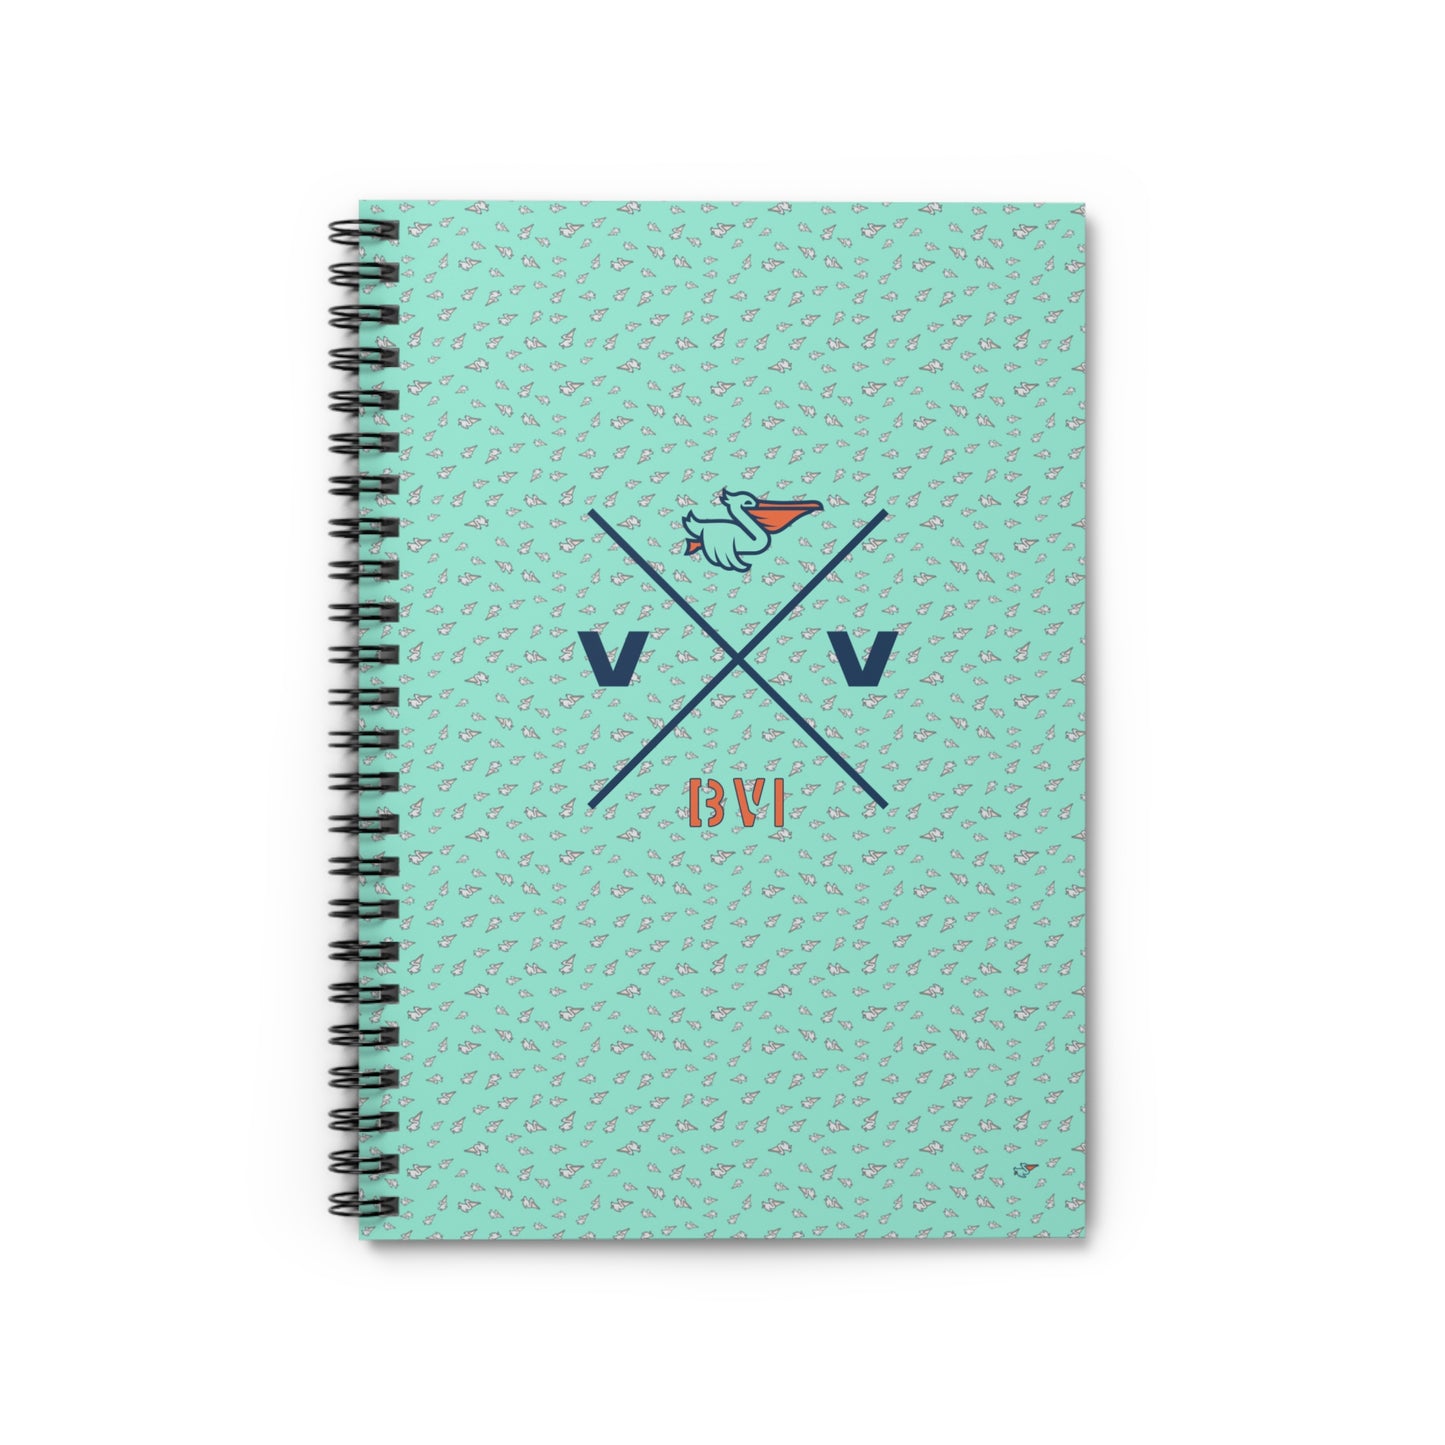 "Virgin Vibes | BVI" Spiral Notebook - Ruled Line